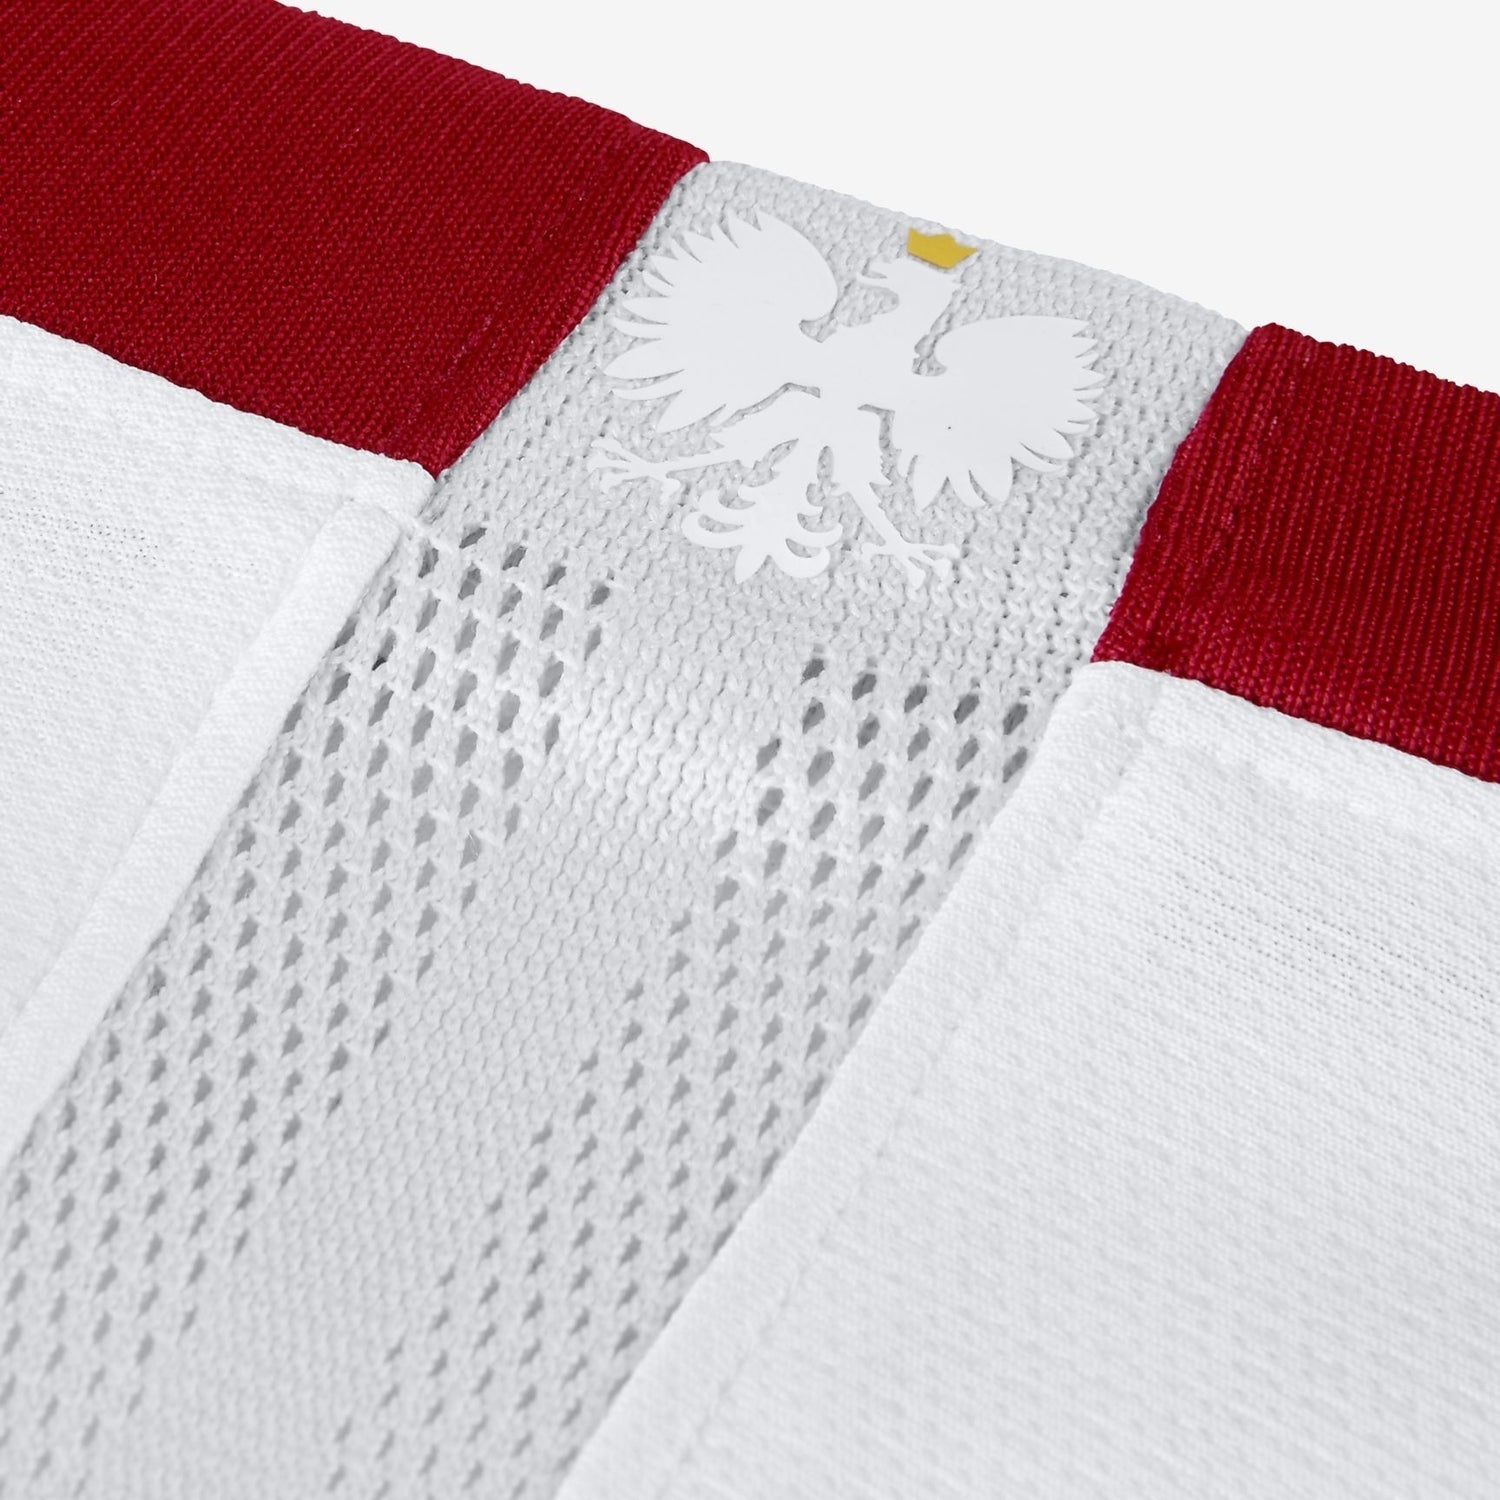 Nike Poland 2018 Home Jersey - White